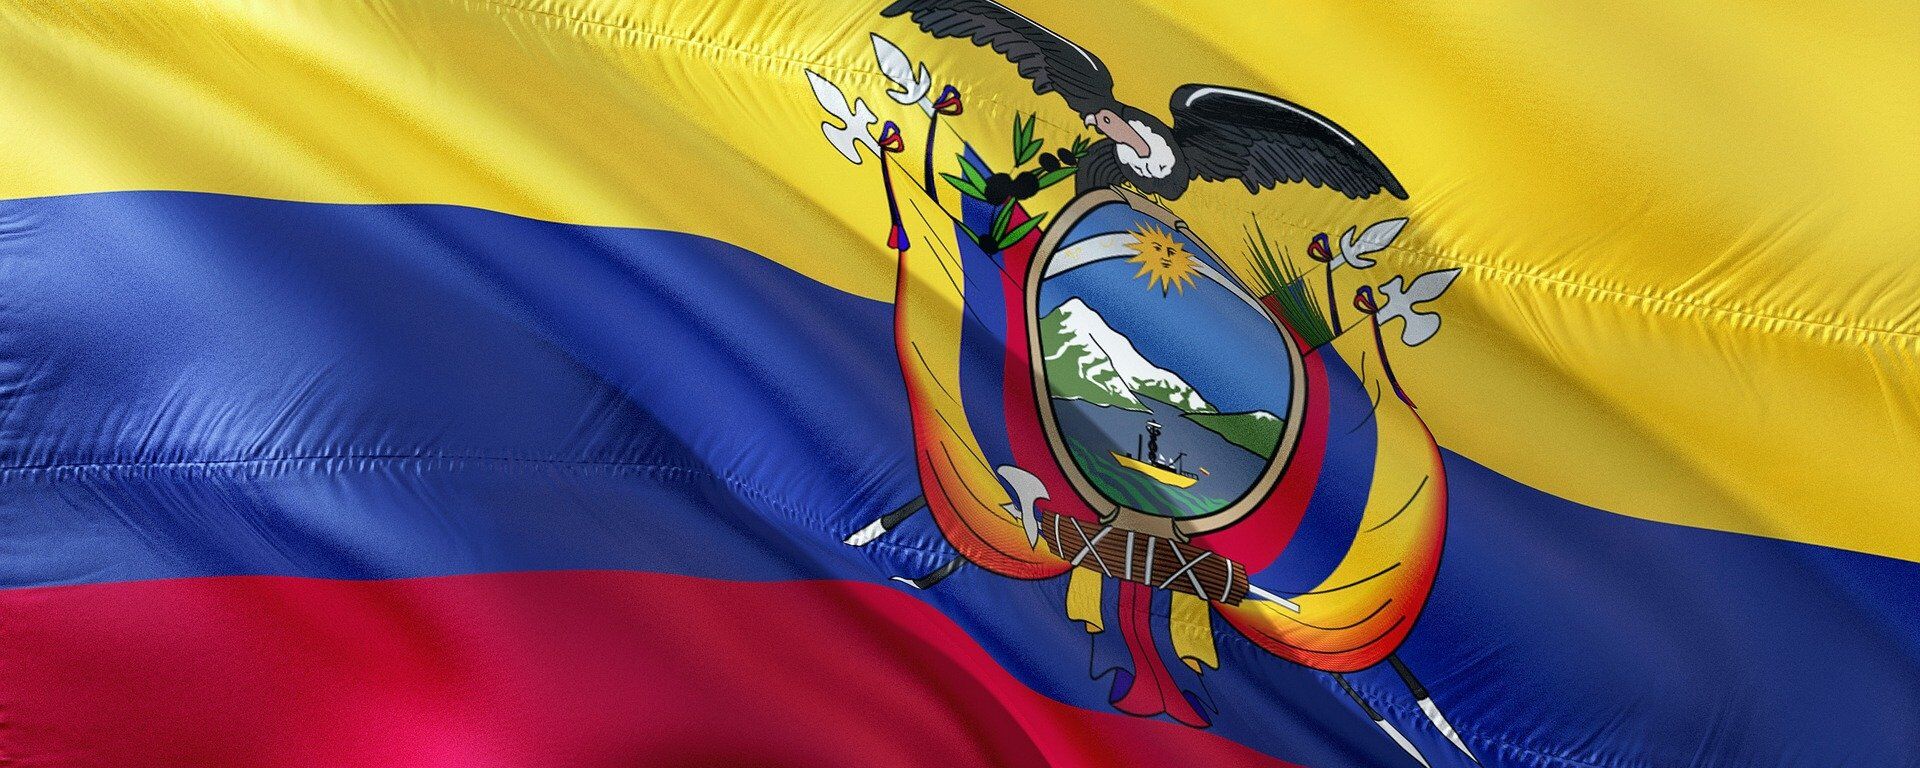 La bandera de Ecuador - Sputnik Mundo, 1920, 11.12.2020